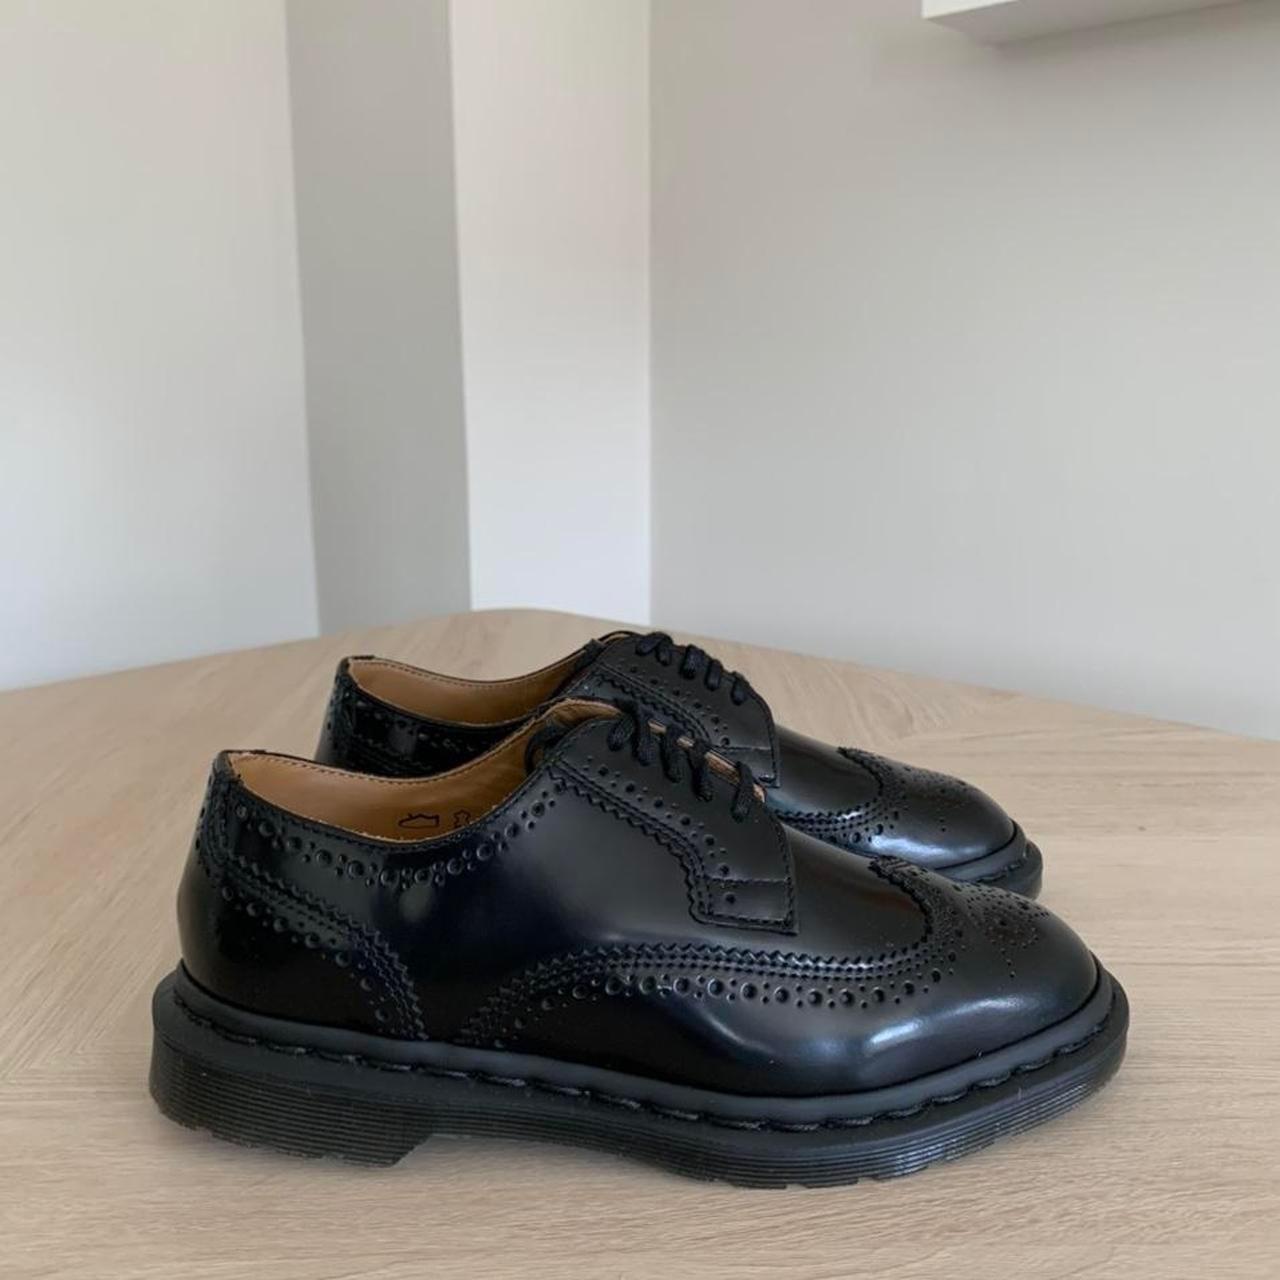 Dr Marten Kelvin II Black Brogue Shoes, UK 3, Can be